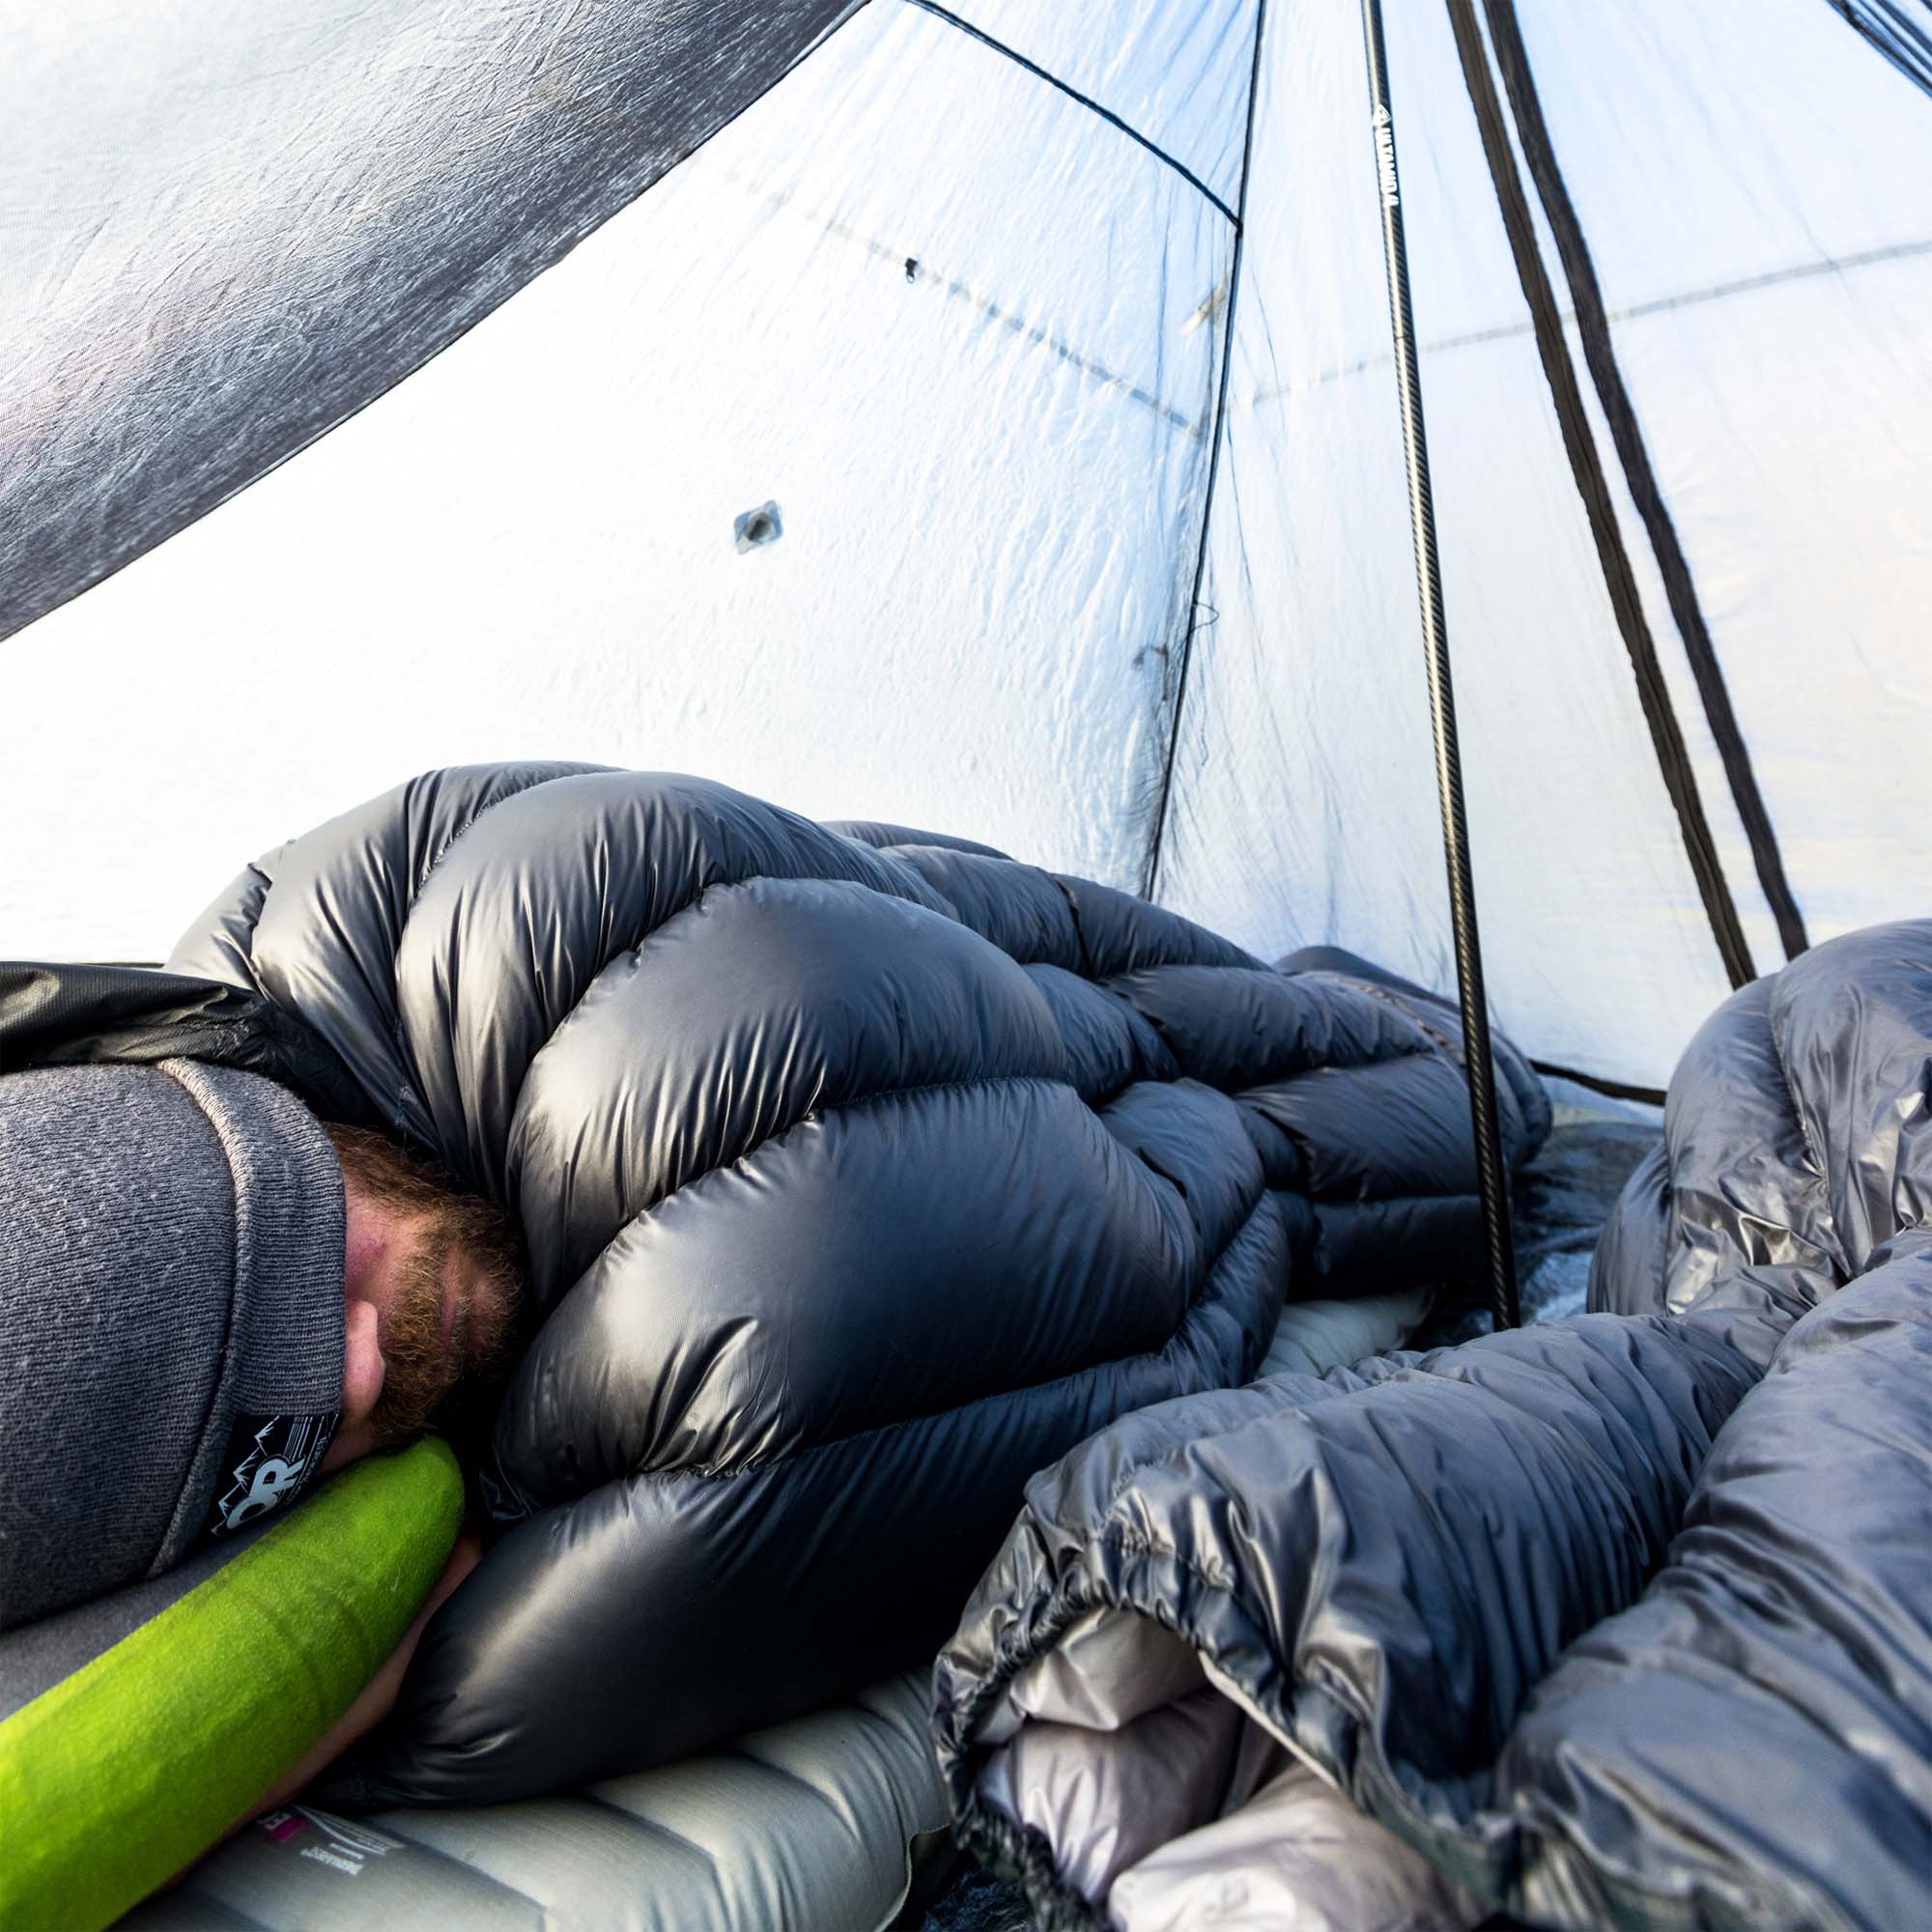 A man sleeping in a sleeping bag in a tent.